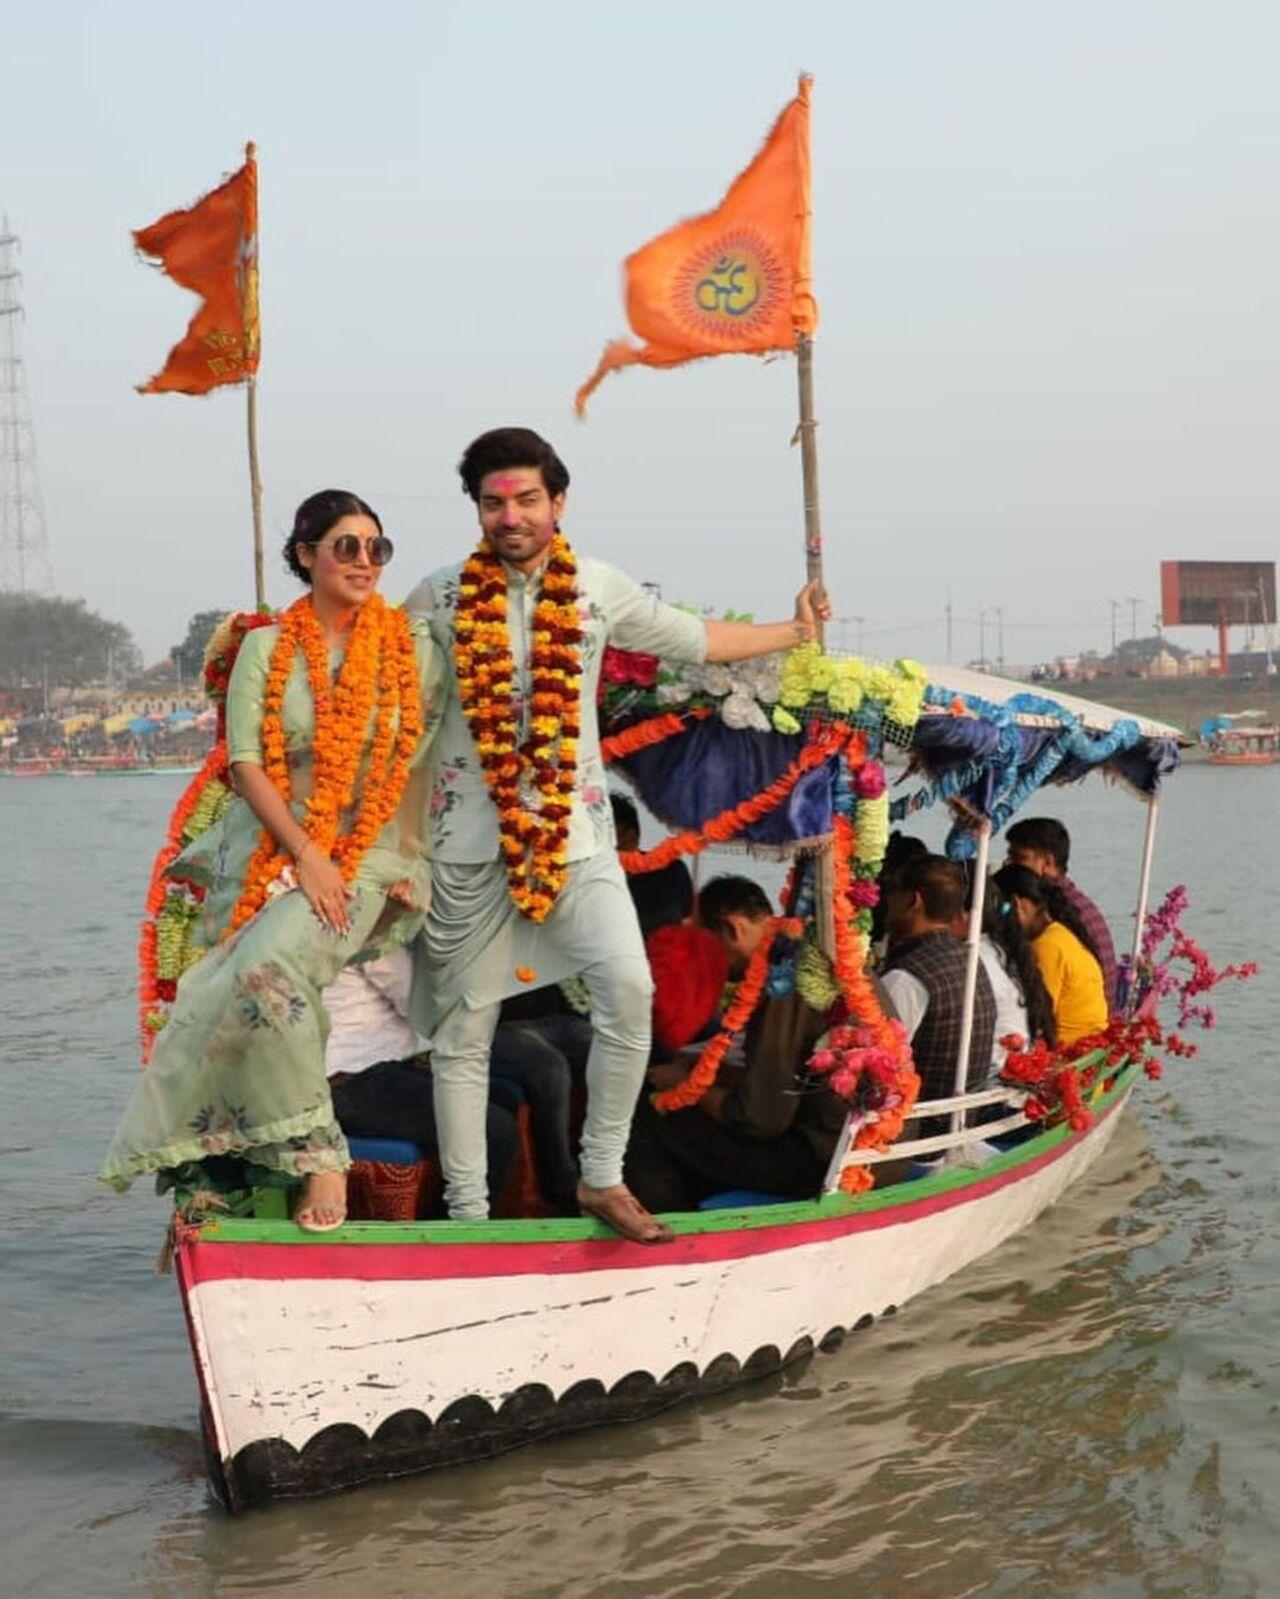 Debina Bonnerjee and Gurmeet Choudhary, who played Ram and Sita in the popular show Ramayan on TV, were in Ayodhya to witness the Pran Pratishtha ceremony